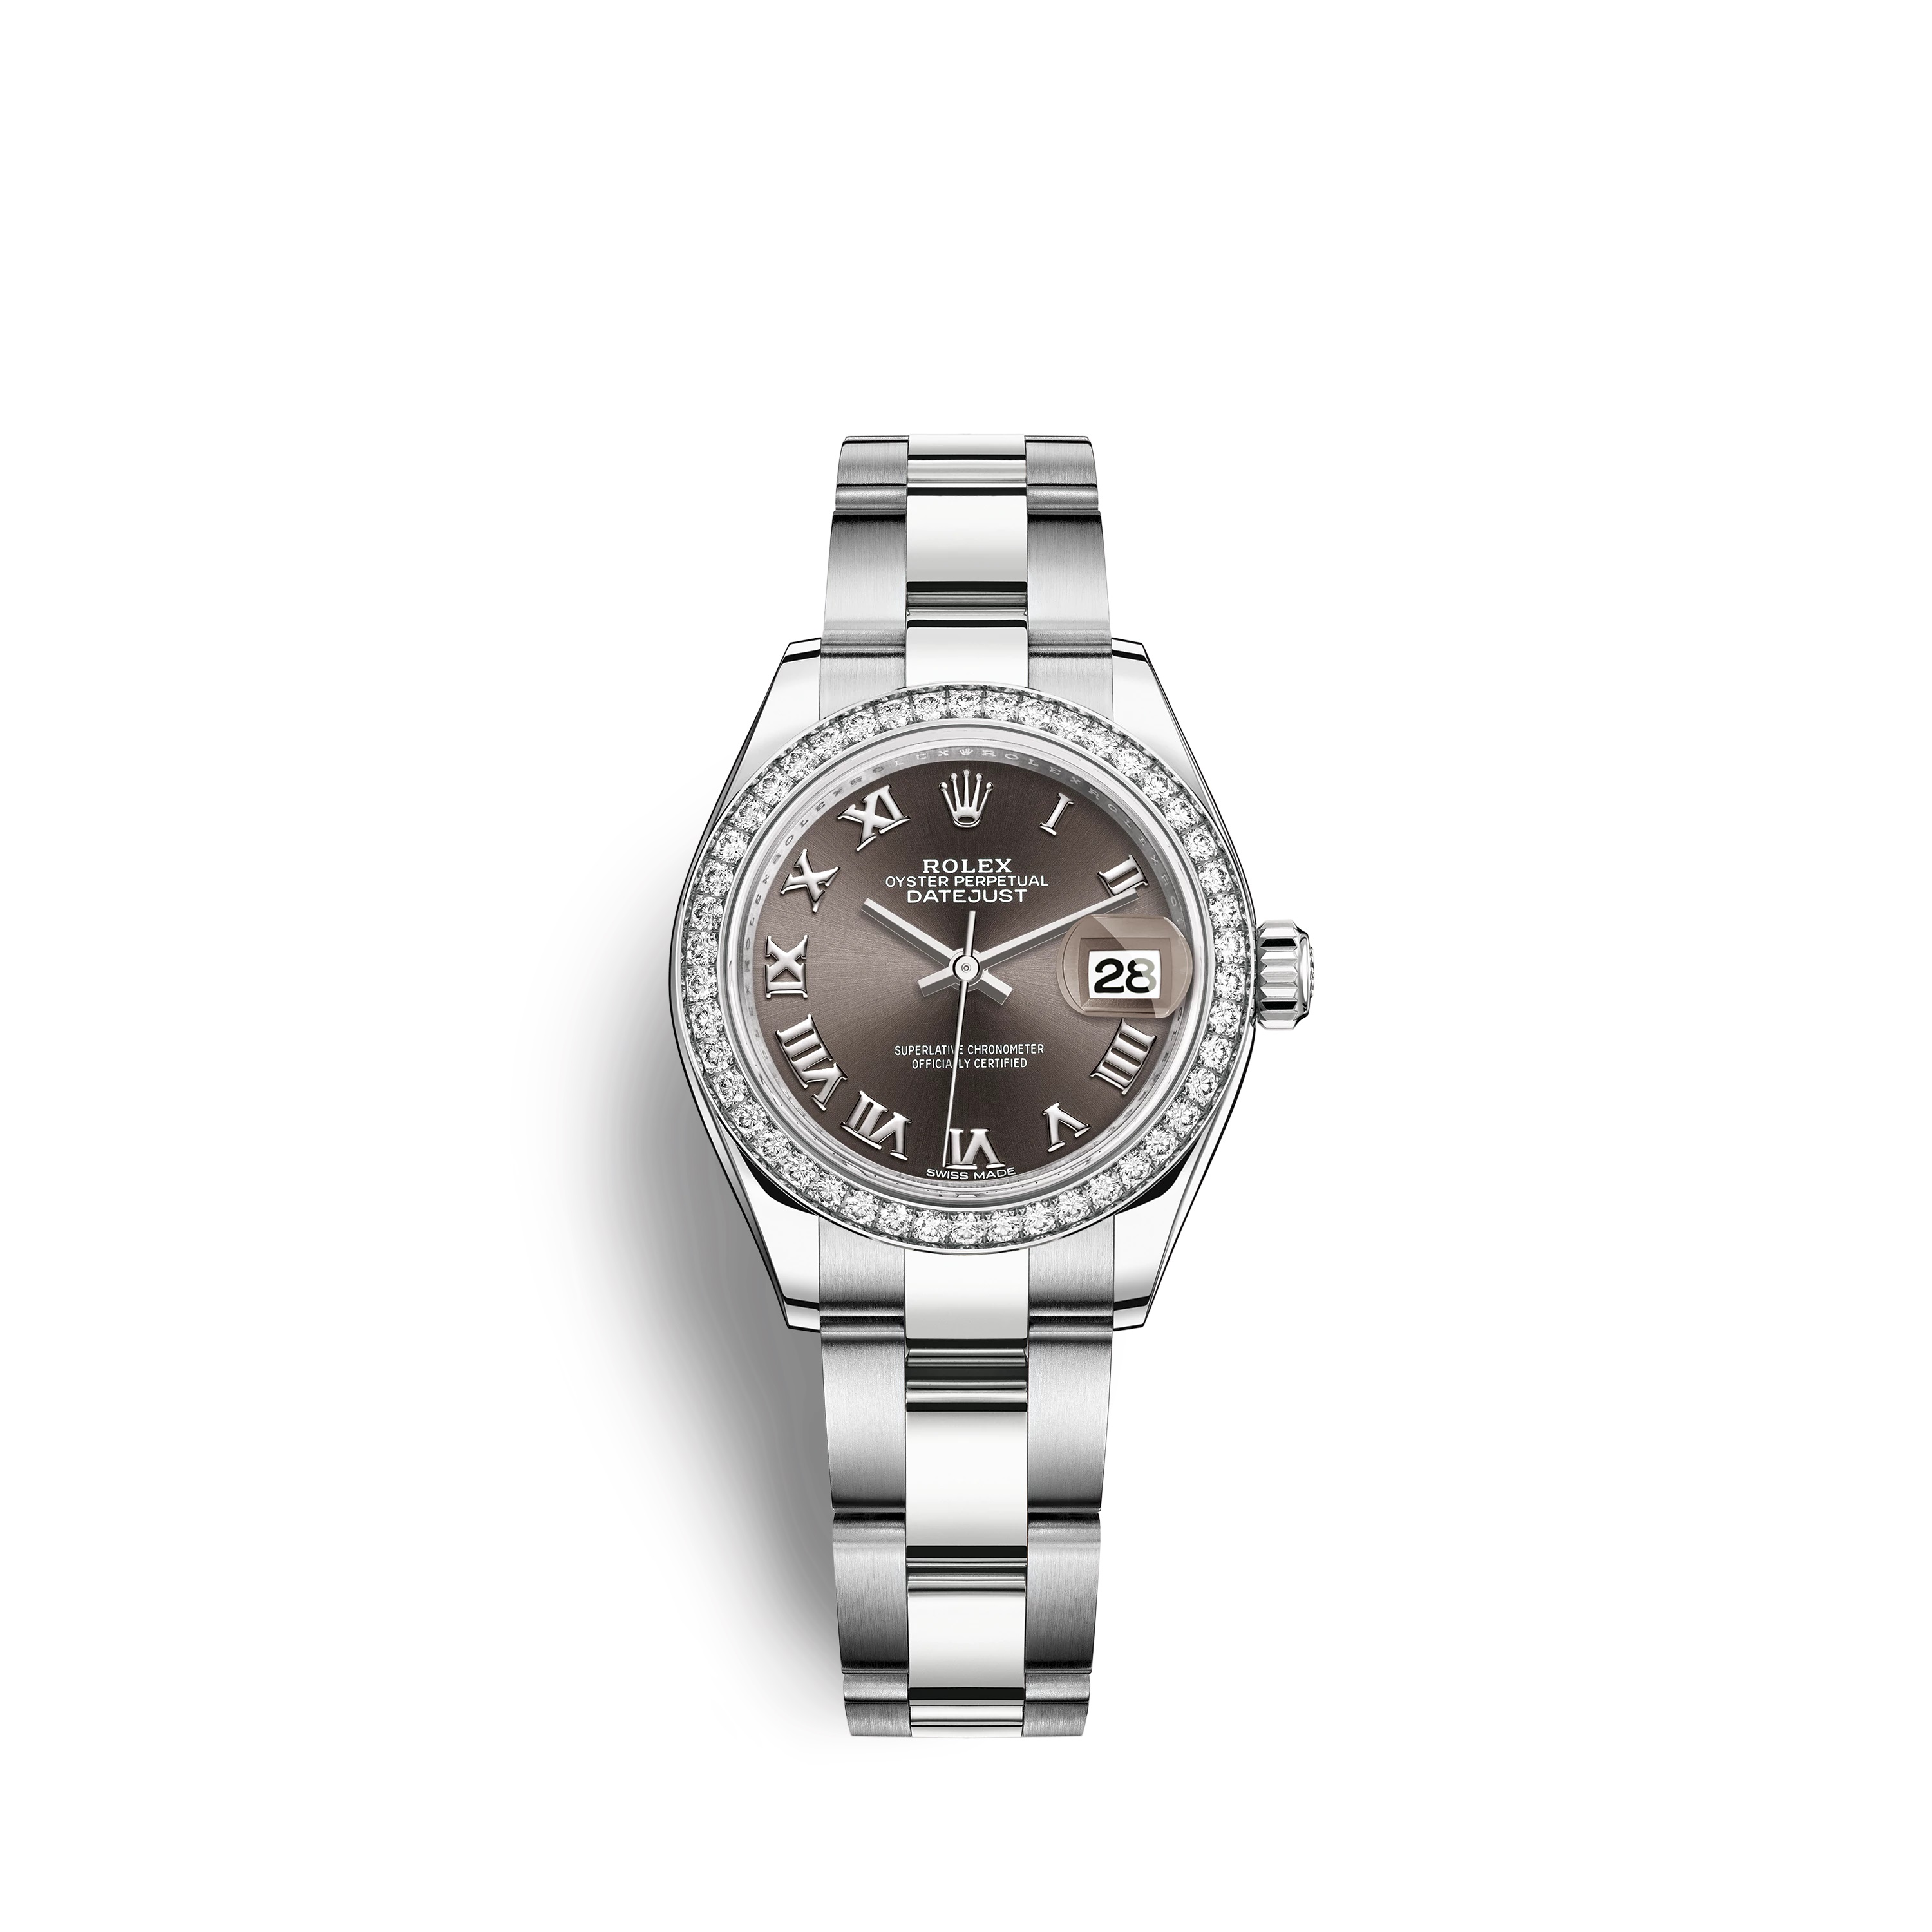 Lady-Datejust 28 279384RBR White Gold & Stainless Steel Watch (Dark Grey)